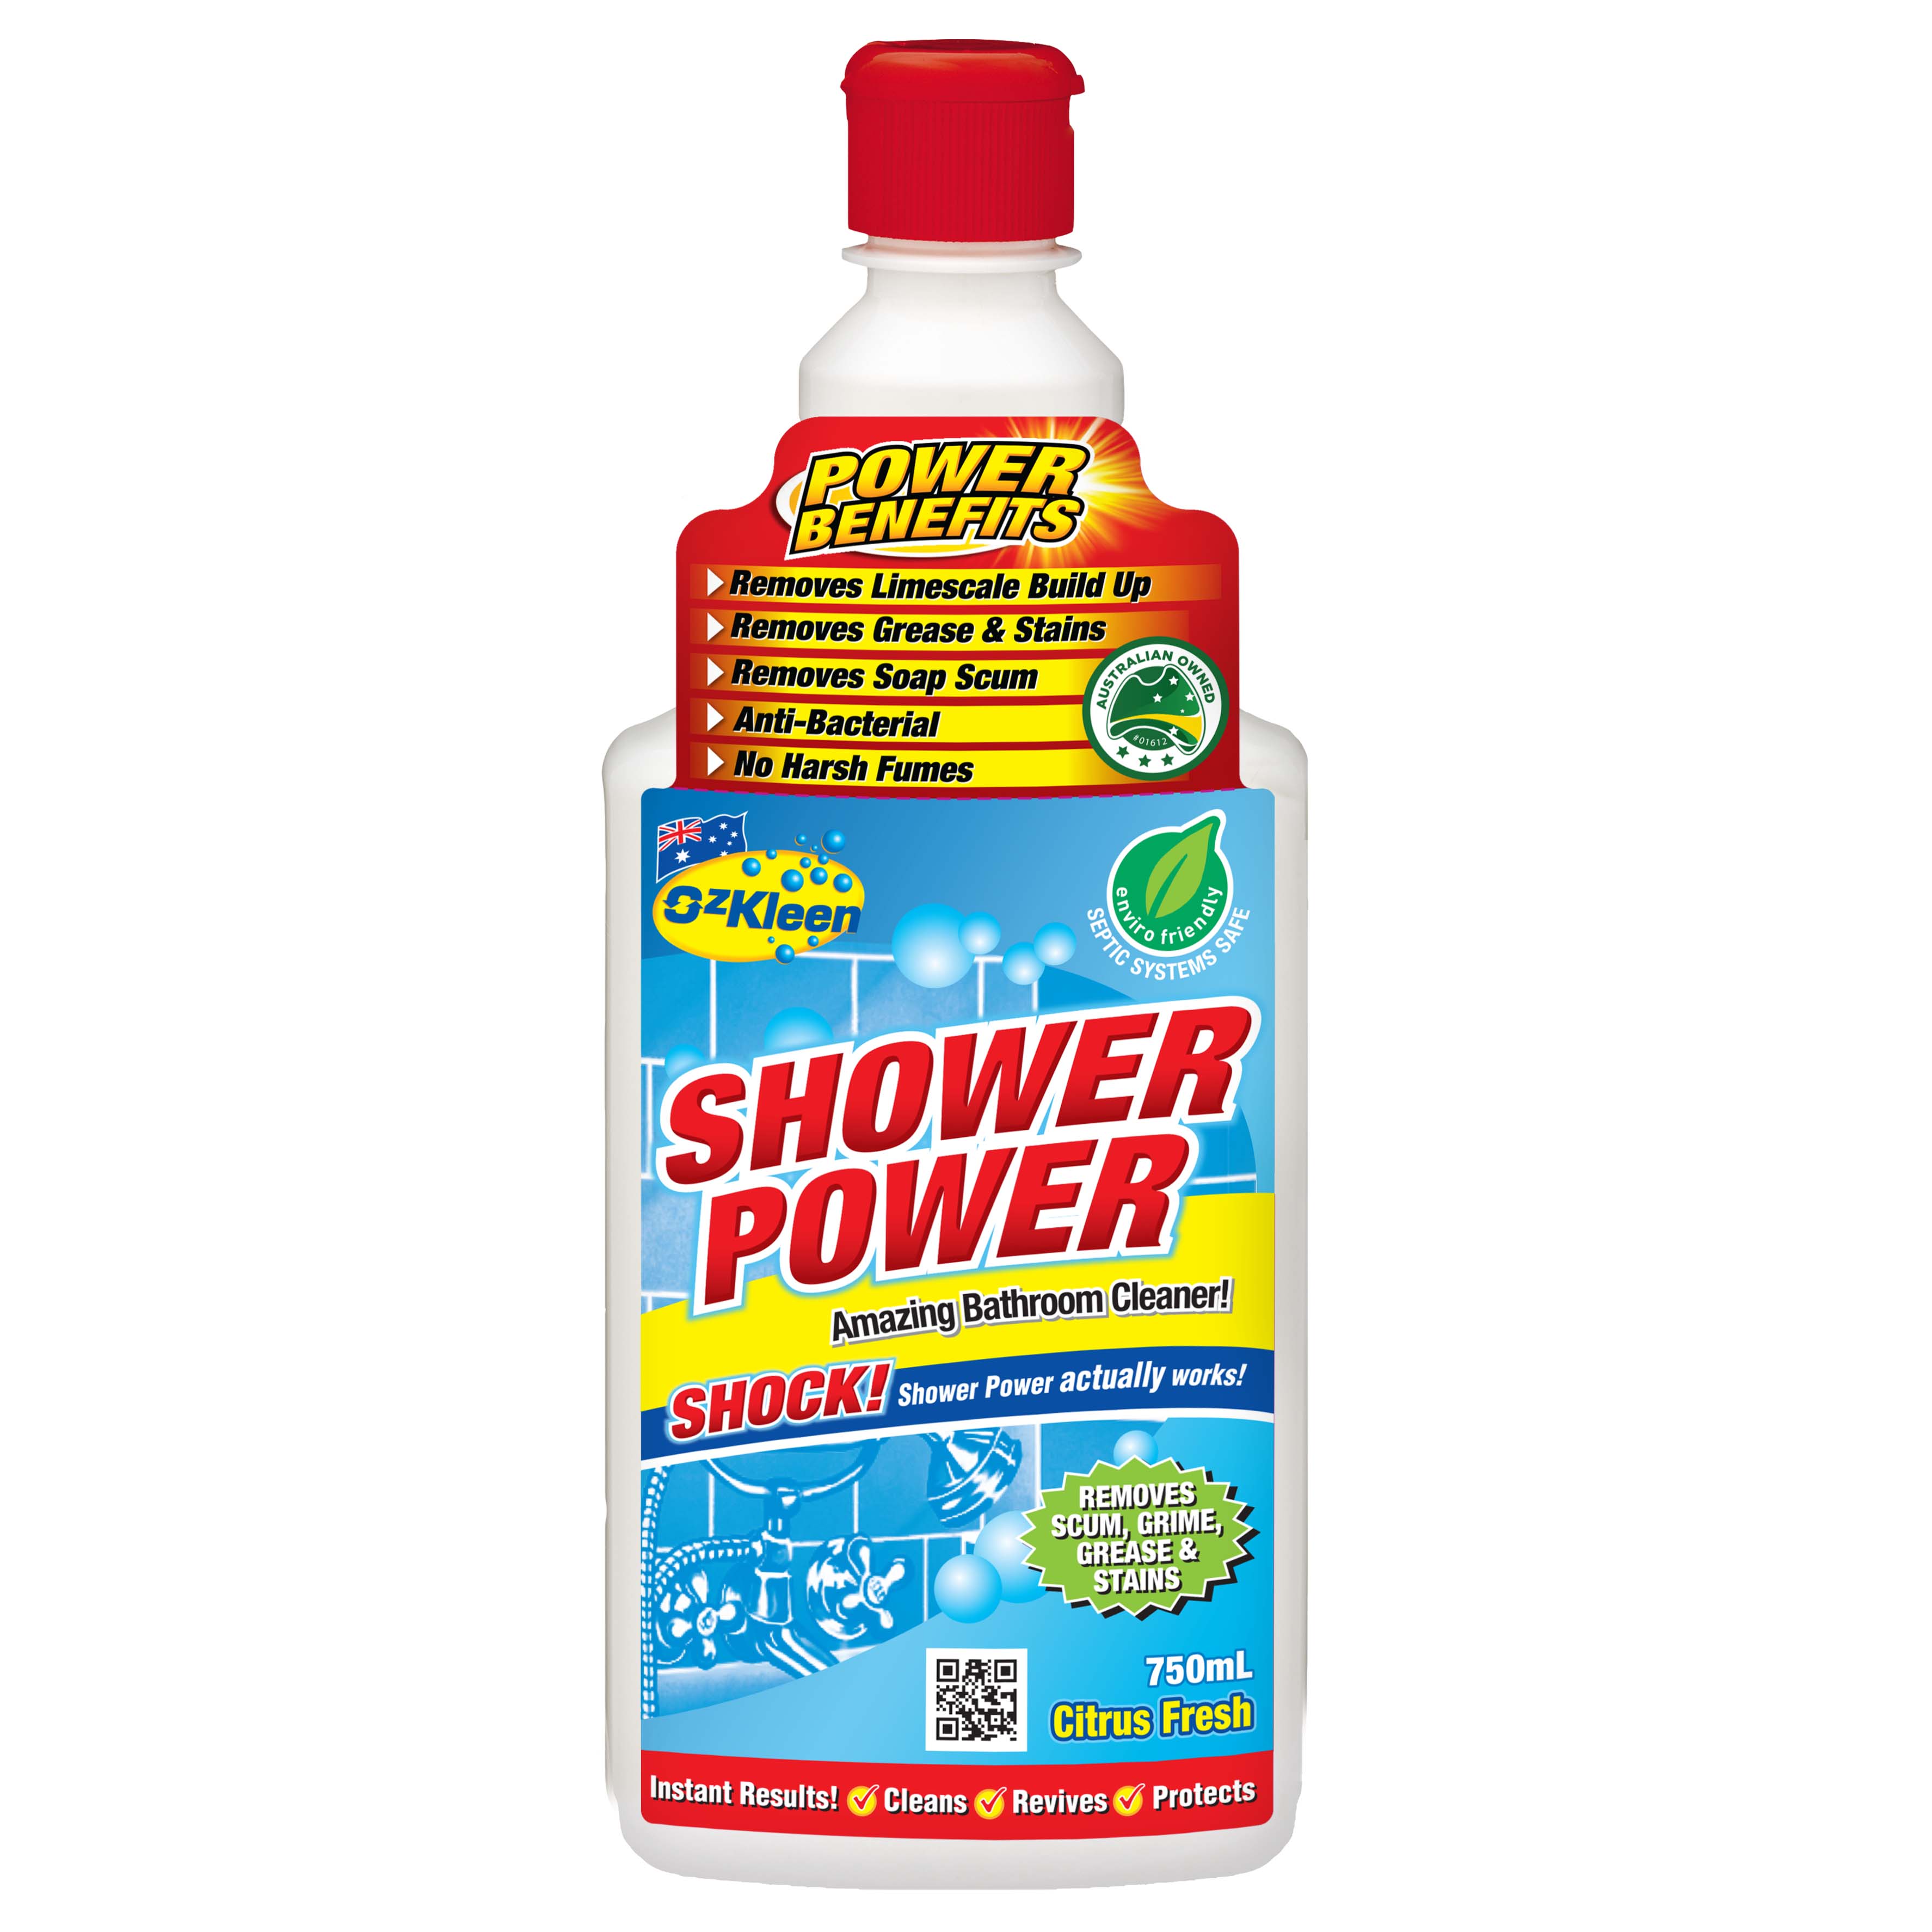 https://ozkleen.com/wp-content/uploads/2022/02/Shower-Power-Citrus-750ml-Front-Product-Image.jpg